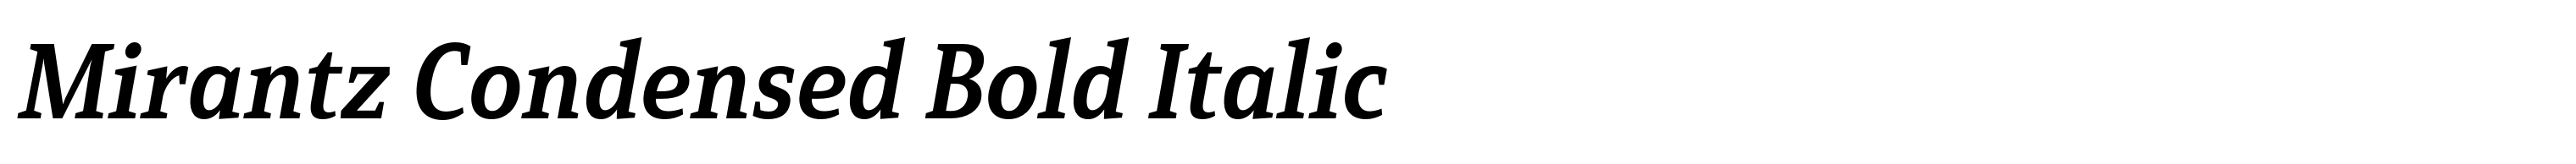 Mirantz Condensed Bold Italic